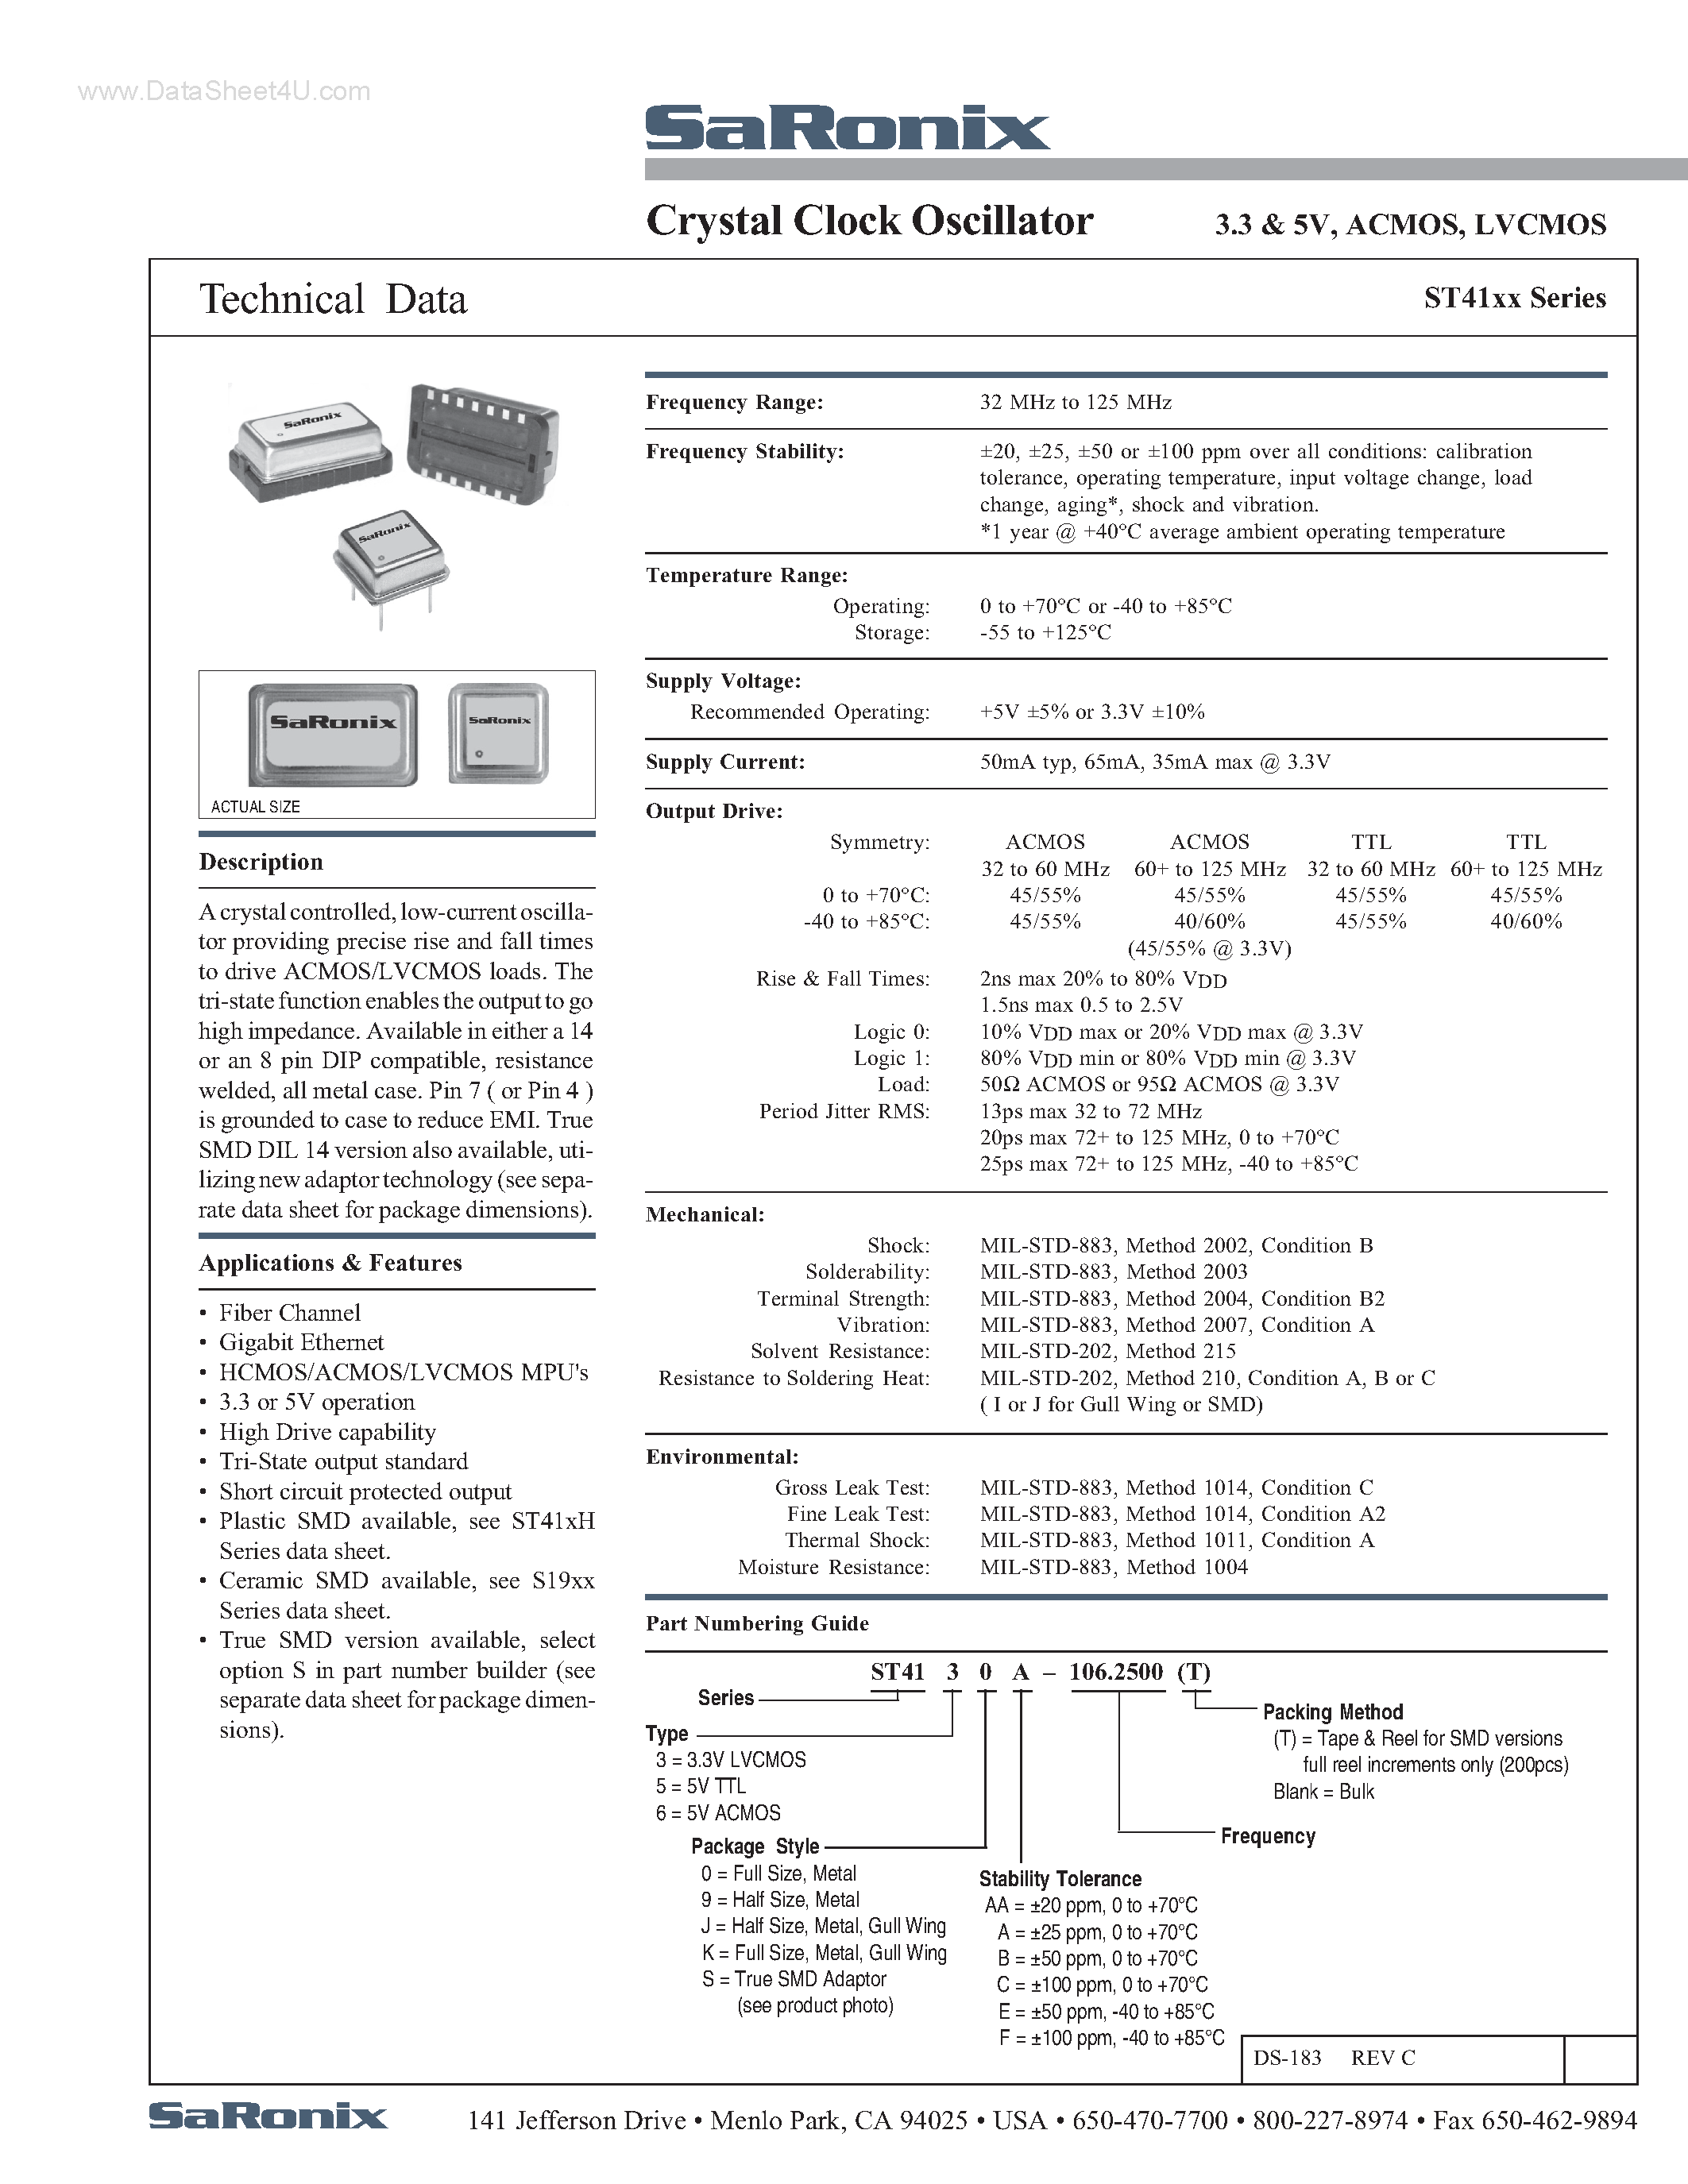 Datasheet ST4130A - (ST41xxA) Crystal Clock Oscillator page 1